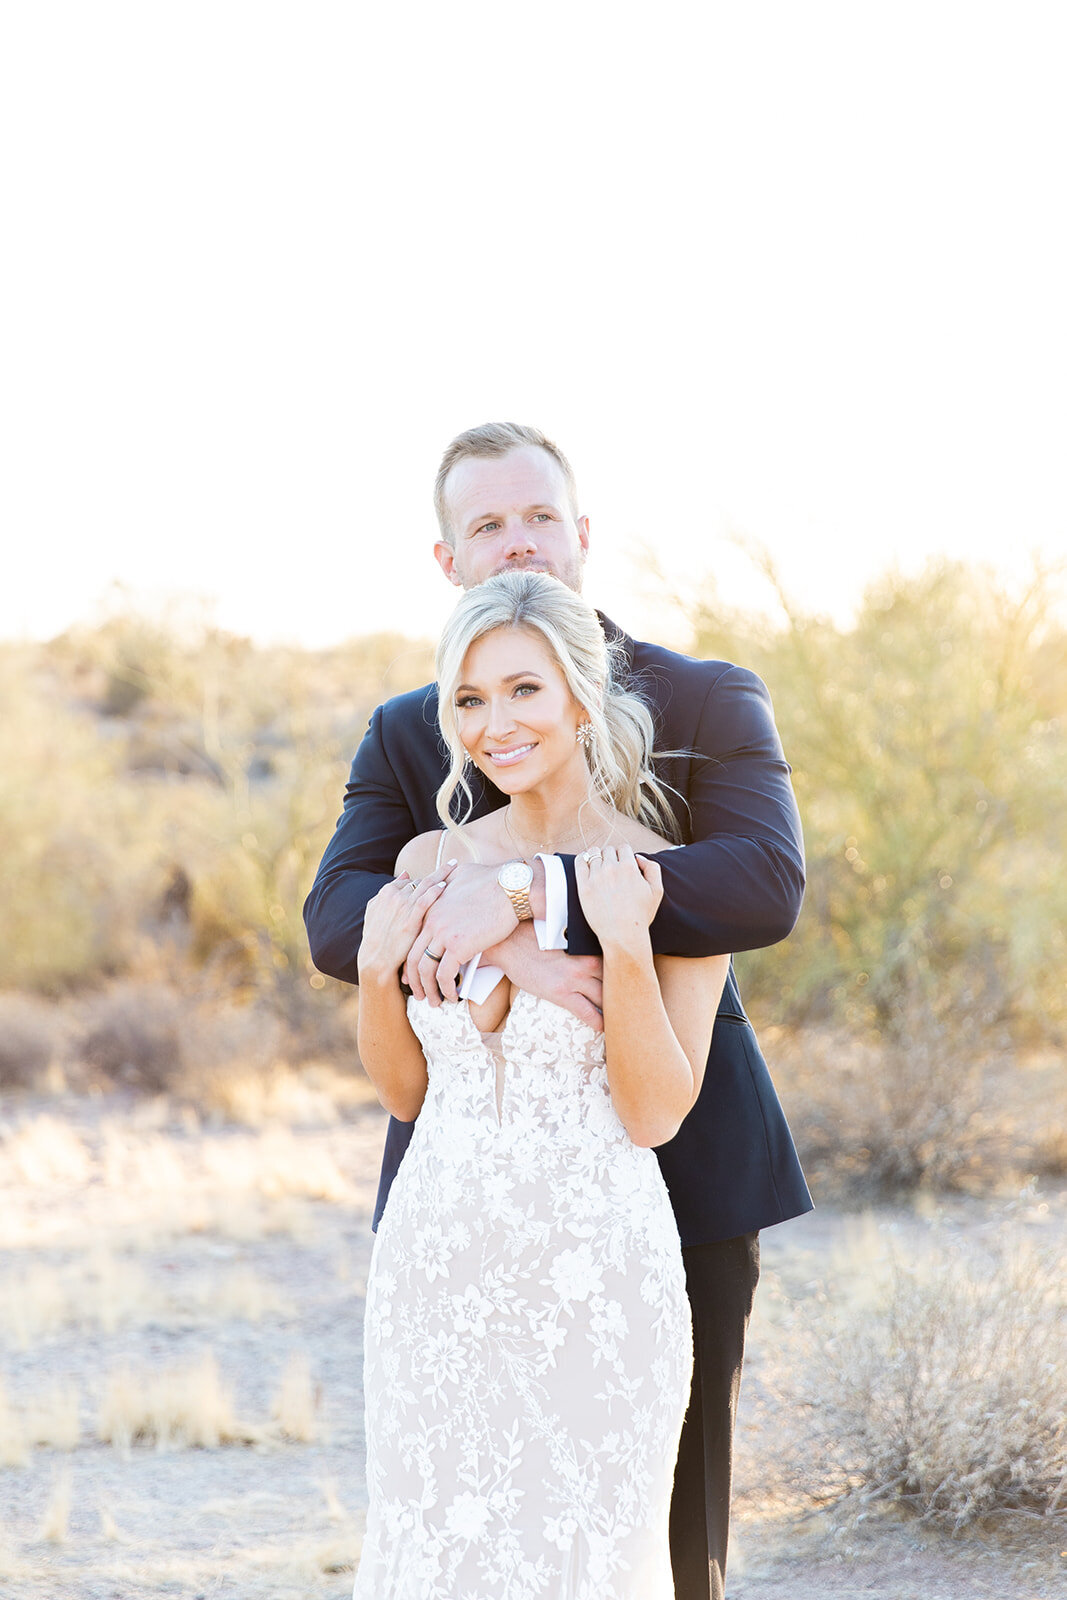 Karlie Colleen Photography - Ashley & Grant Wedding - The Paseo - Phoenix Arizona-776